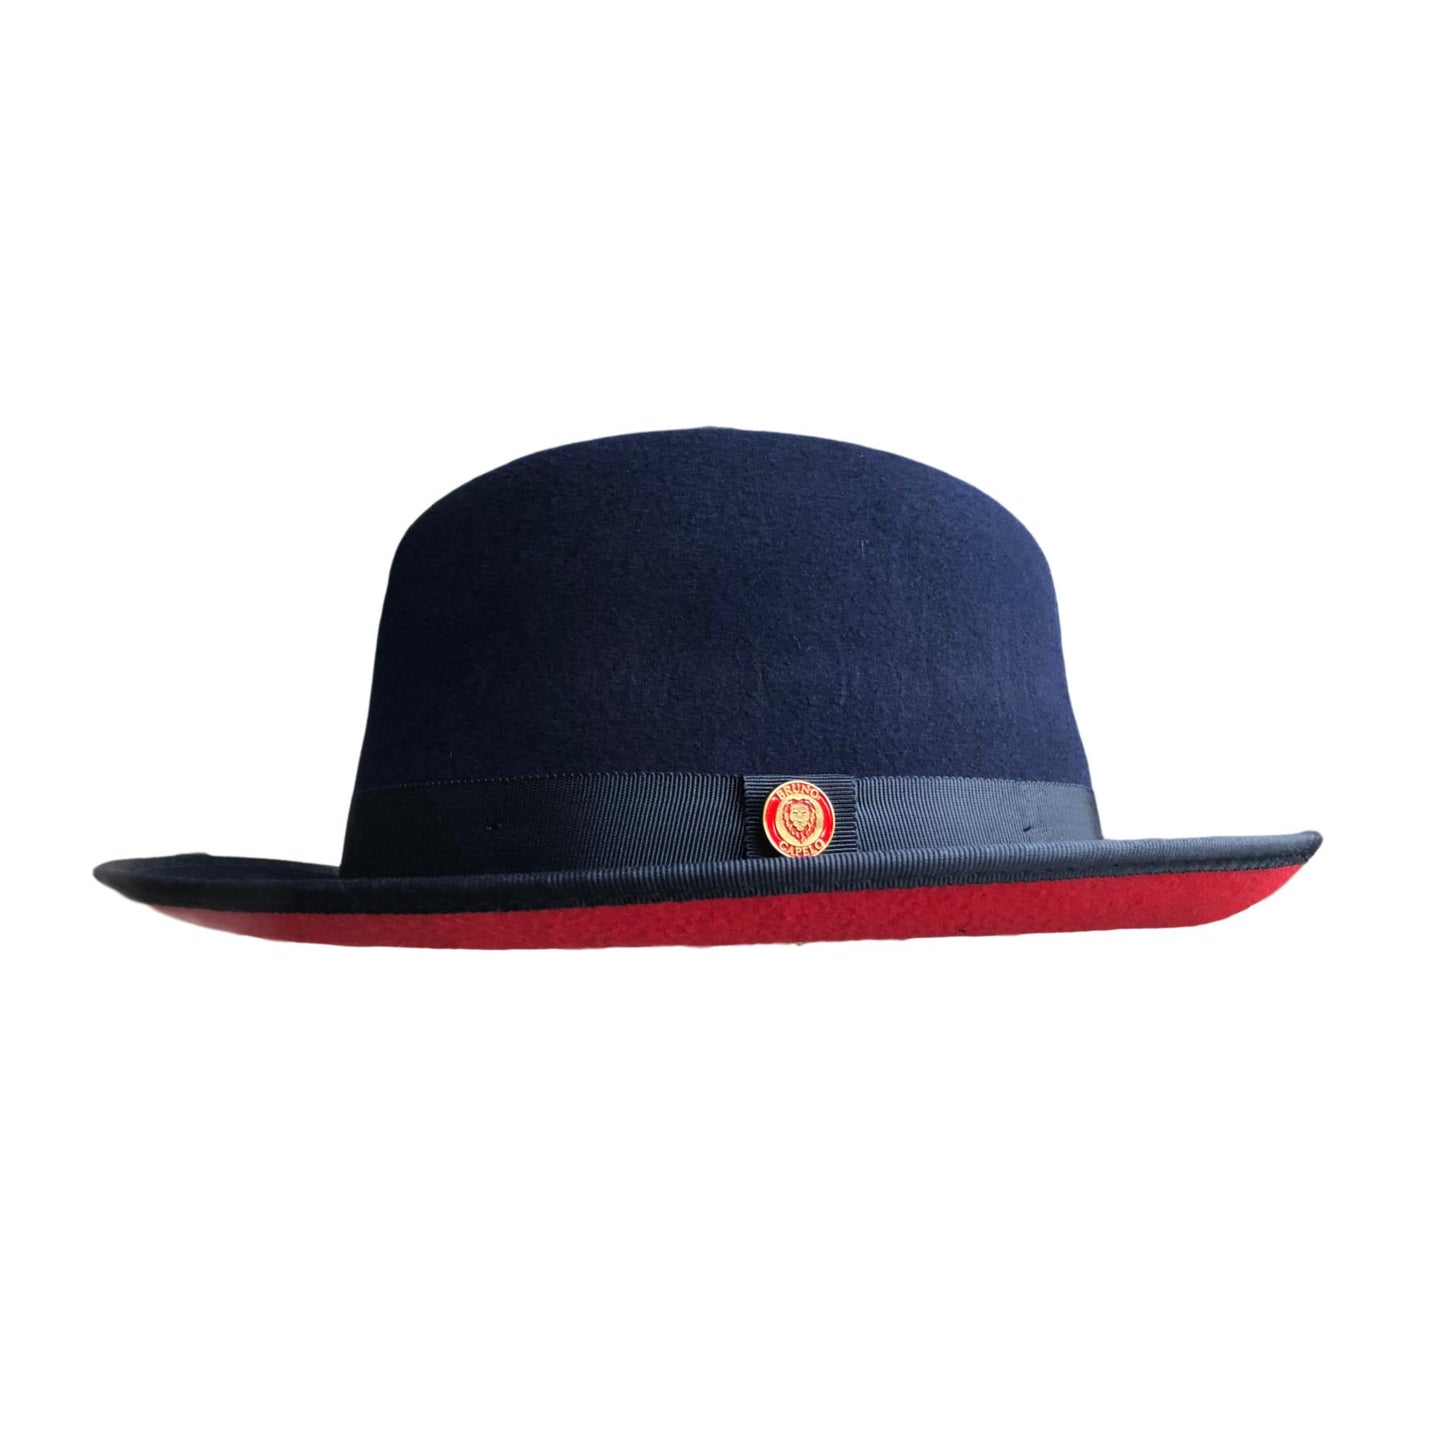 Bruno Capelo Princeton Navy Red Bottom Hat PR-305